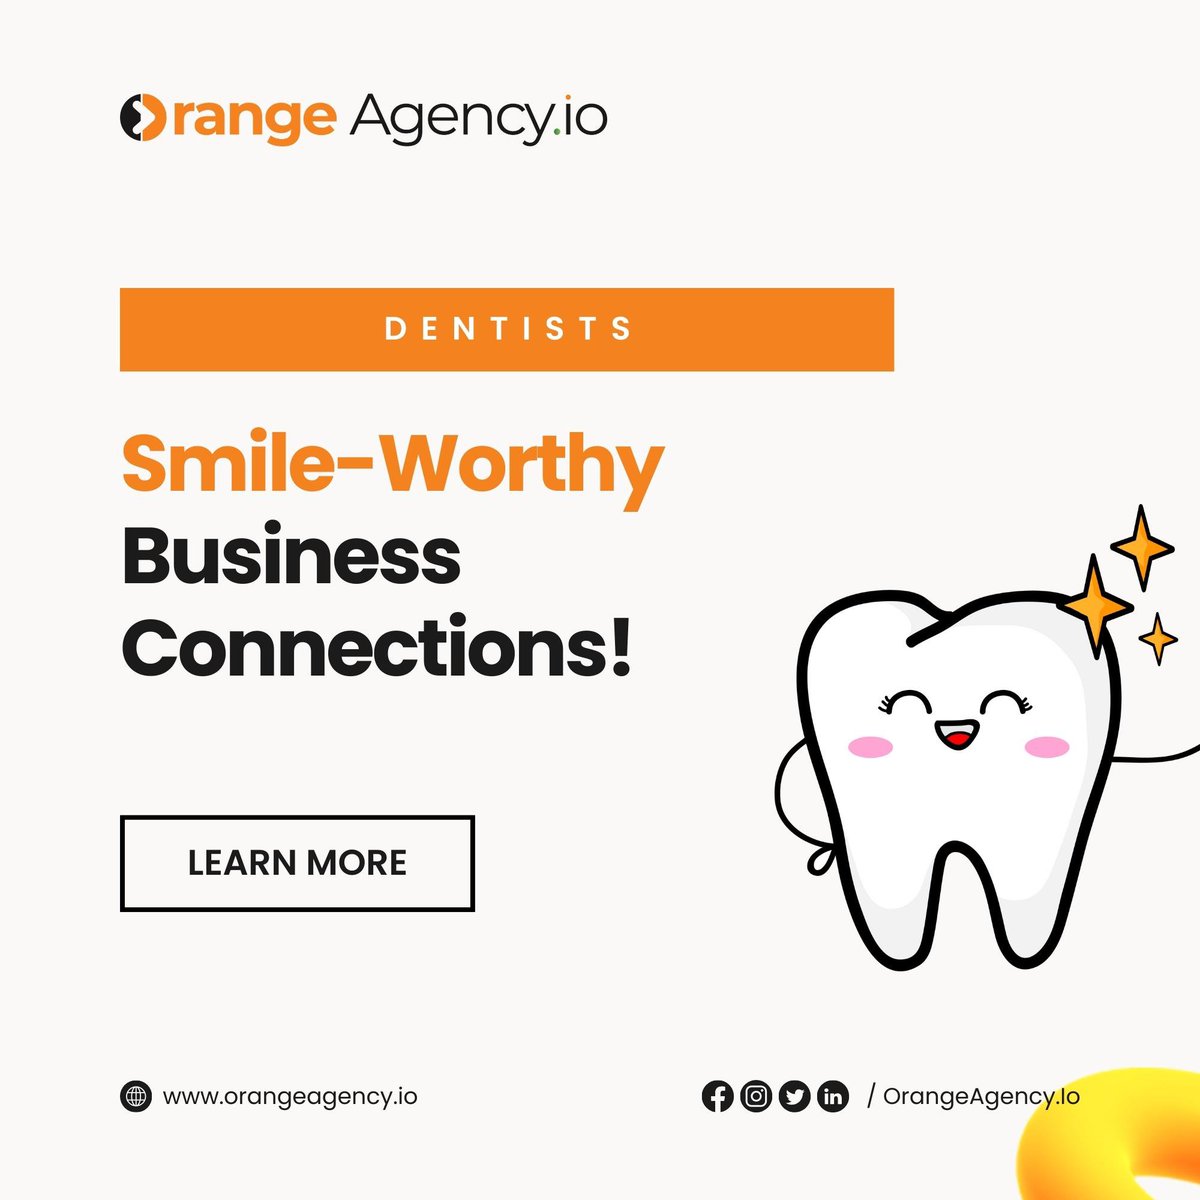 Smile-Worthy Business Connections!

Connect with Success! tinyurl.com/bdfb2jes

#OrangeAgency #DentalLeads #LinkedInDental #DentalConnections #DentalB2B #DentalSuccess #DentalNetworking #DentalProfessionals
#LinkedInDentists #DentalGrowth #Halloween #FNAF #Dagestan #Friends